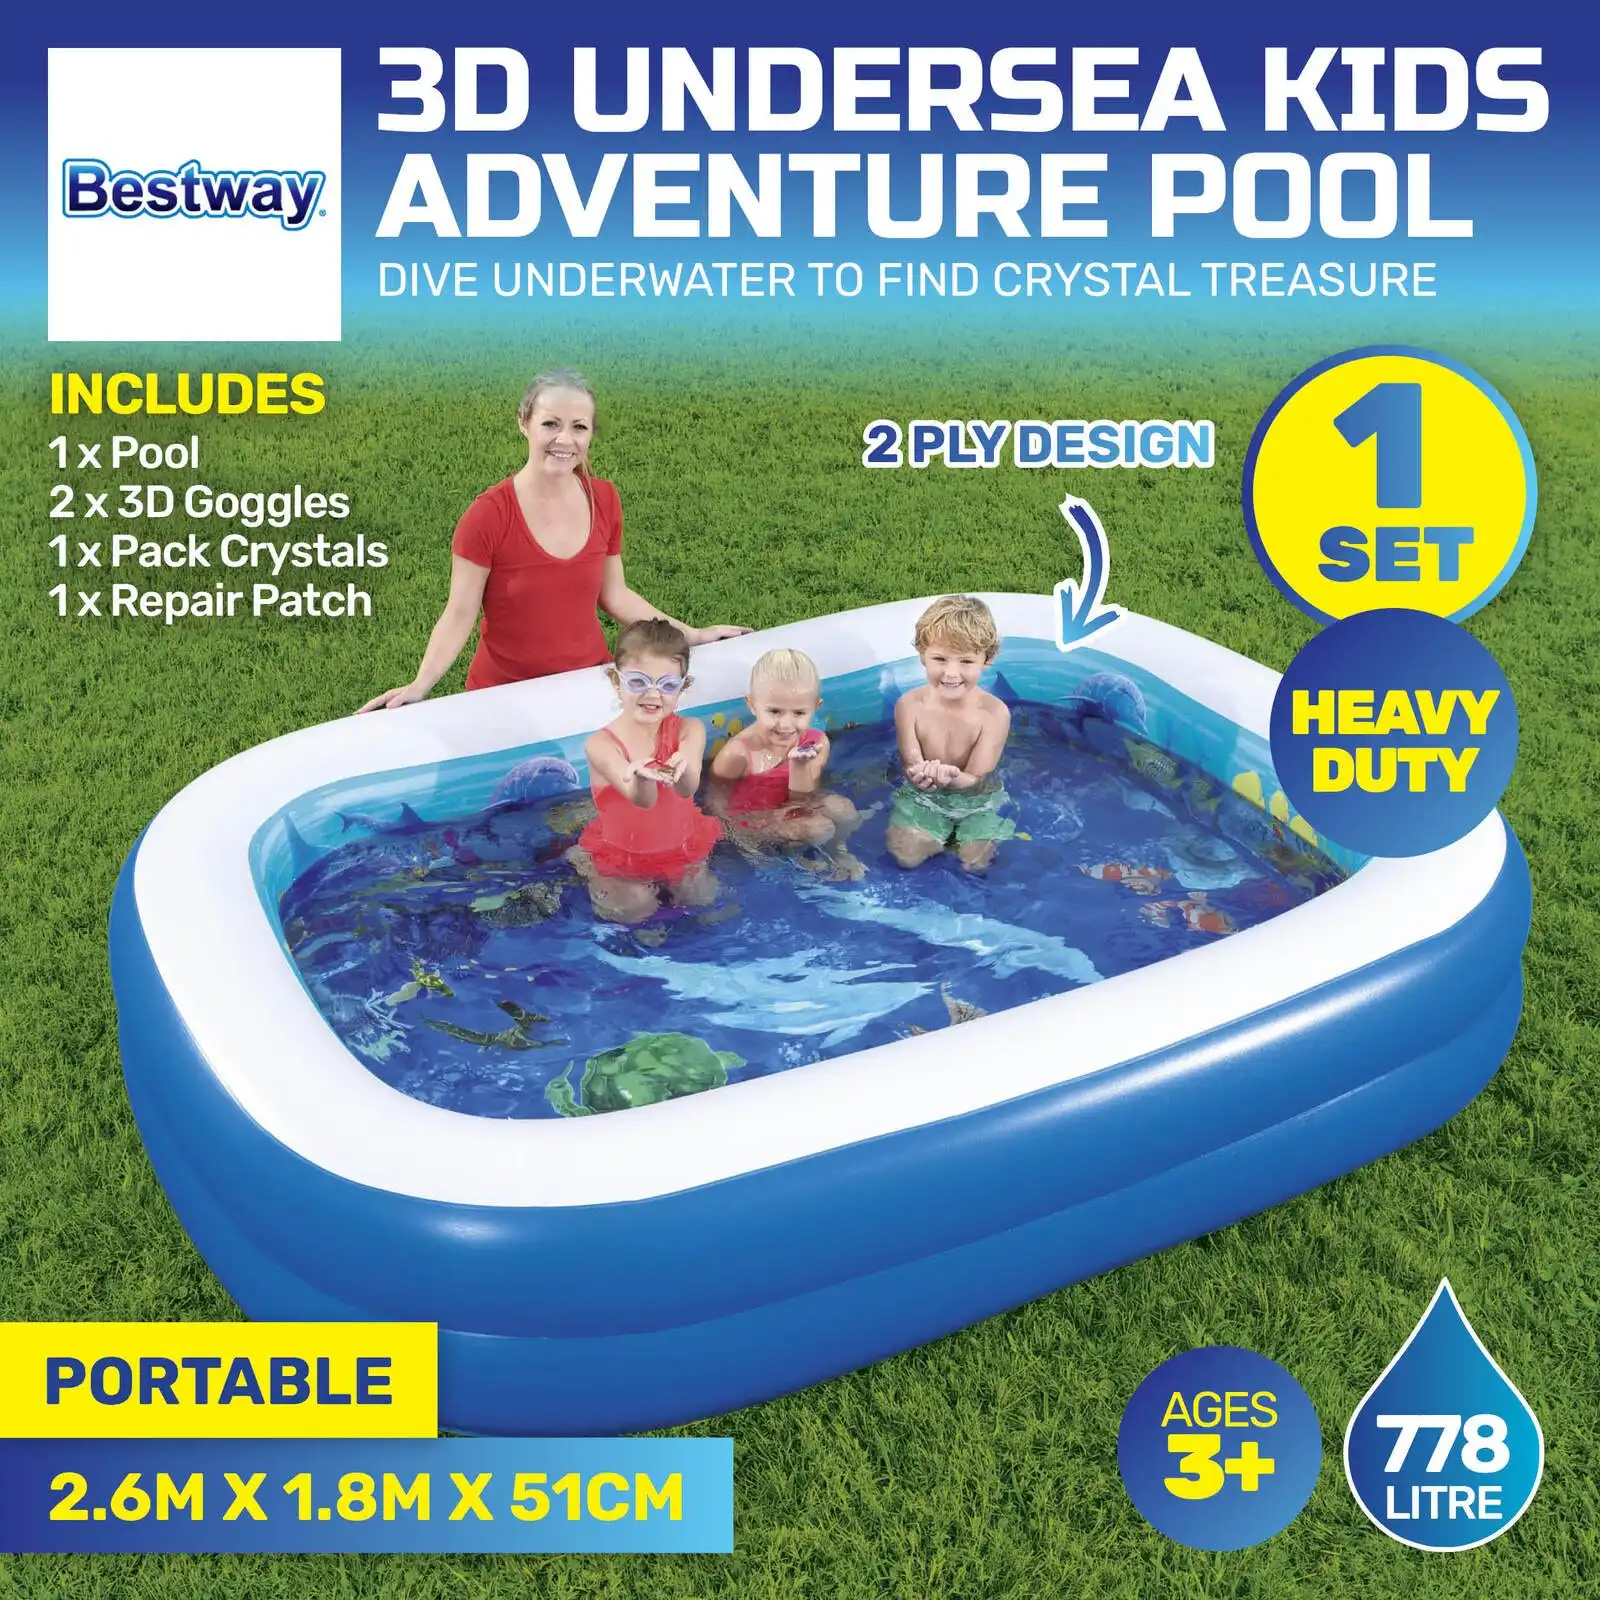 Bestway® Inflatable Kids Pool 3D Undersea Adventure 3D Goggles Included 778L